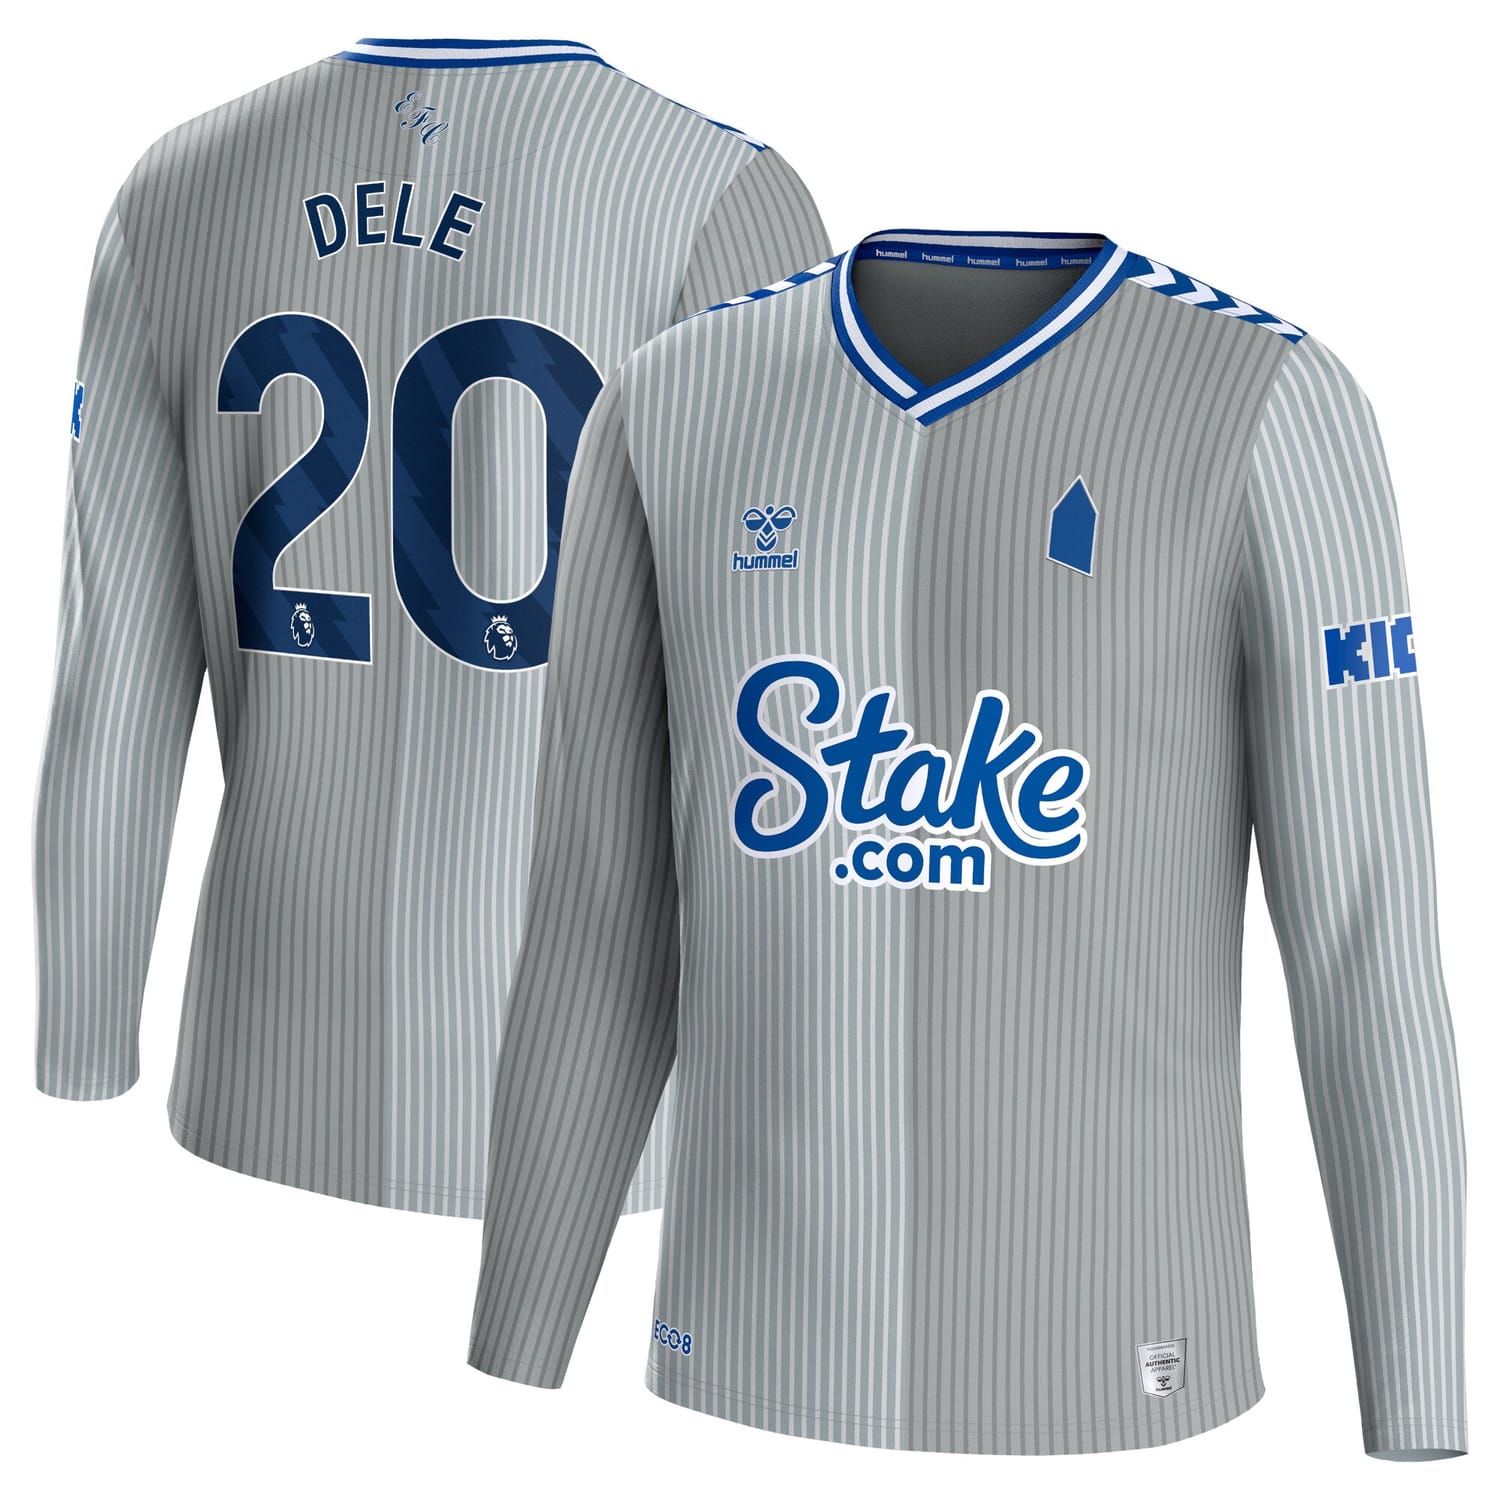 Premier League Everton Third Jersey Shirt Long Sleeve 2023-24 player Dele Alli 20 printing for Men